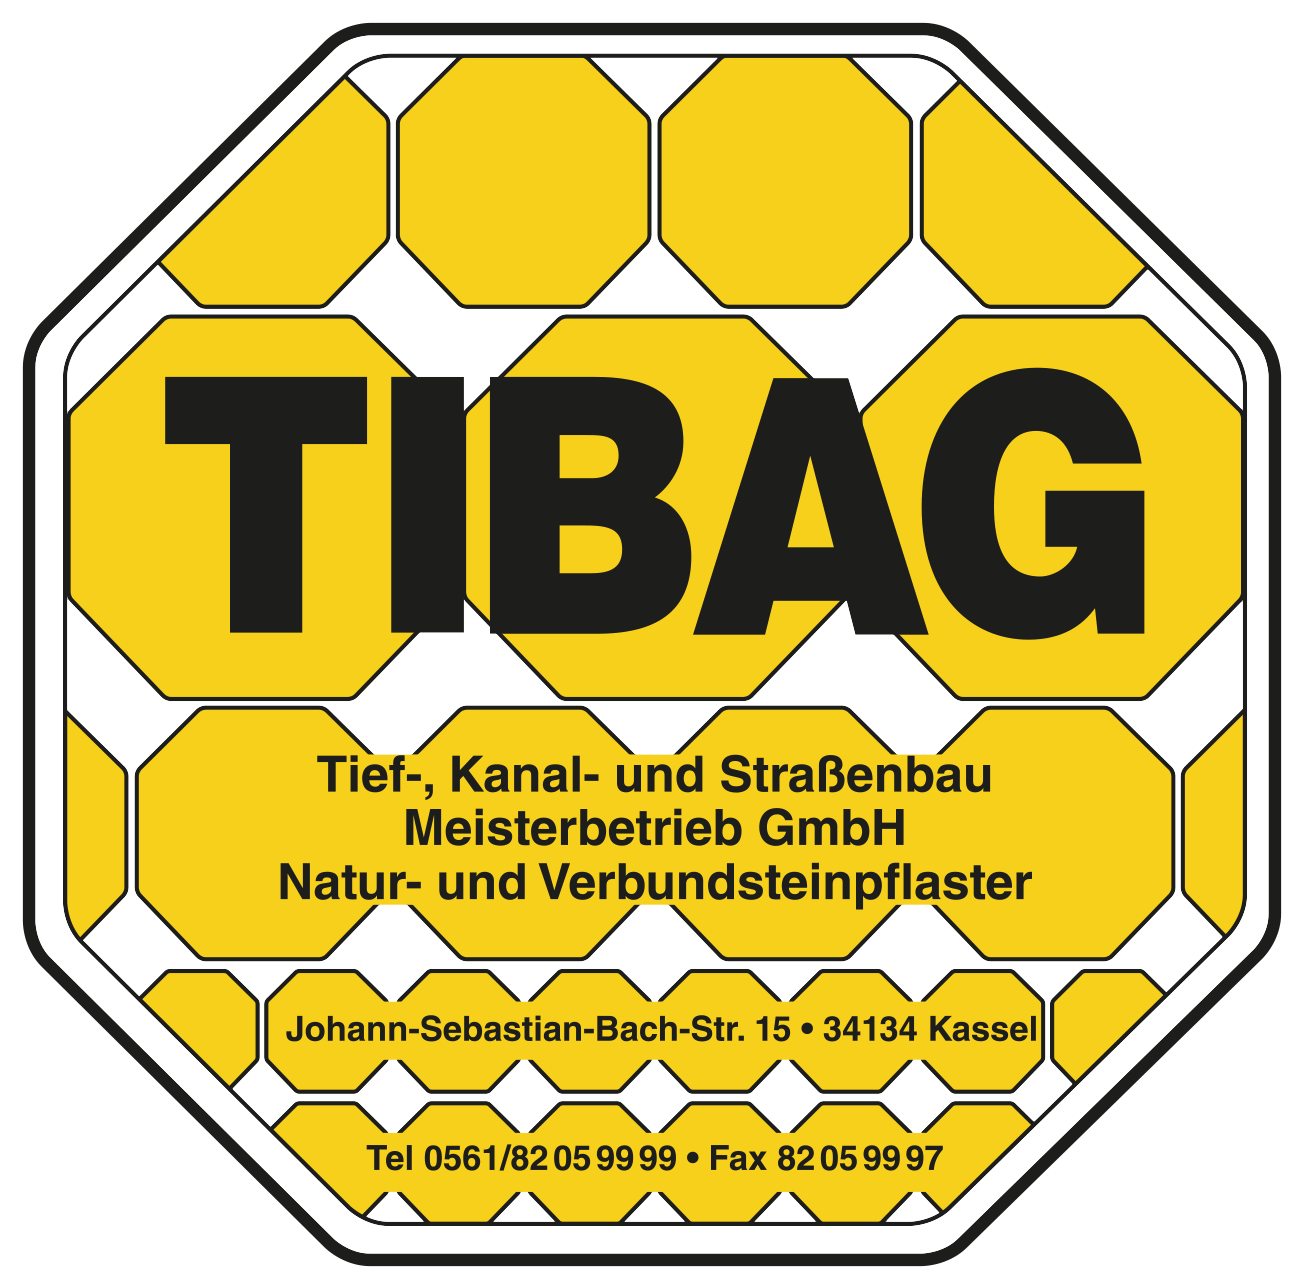 Tibag GmbH